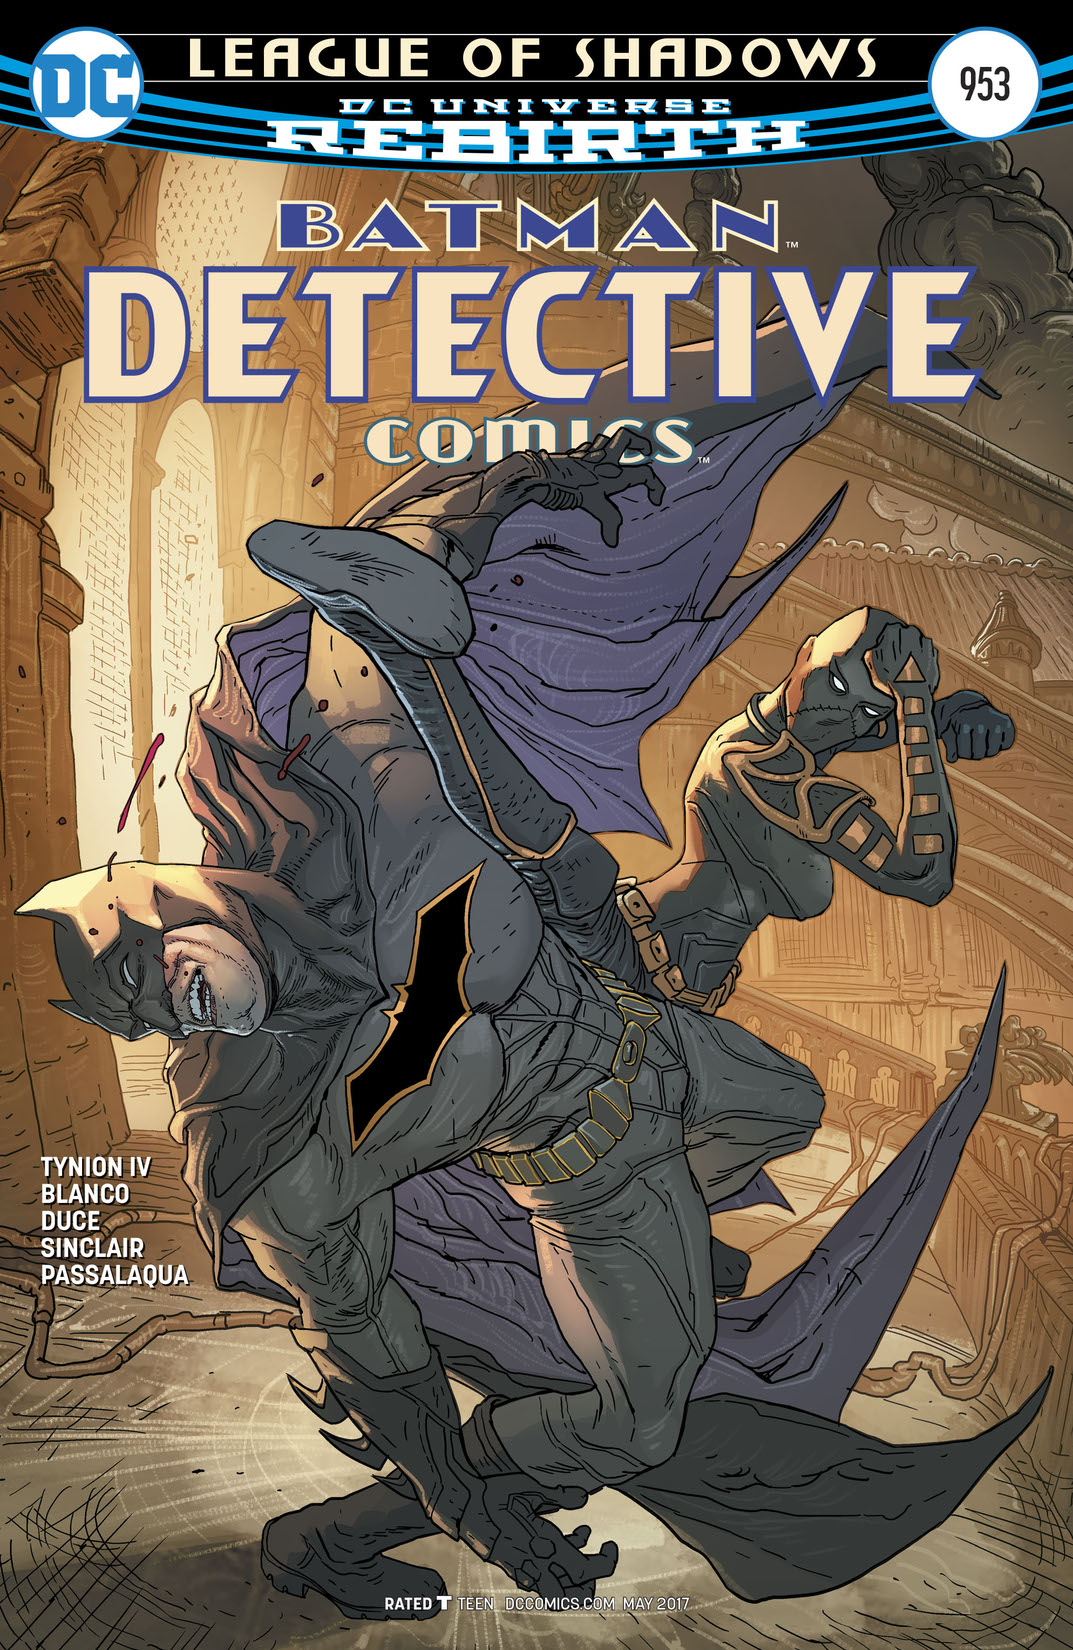 Detective Comics (2016-) #953 preview images